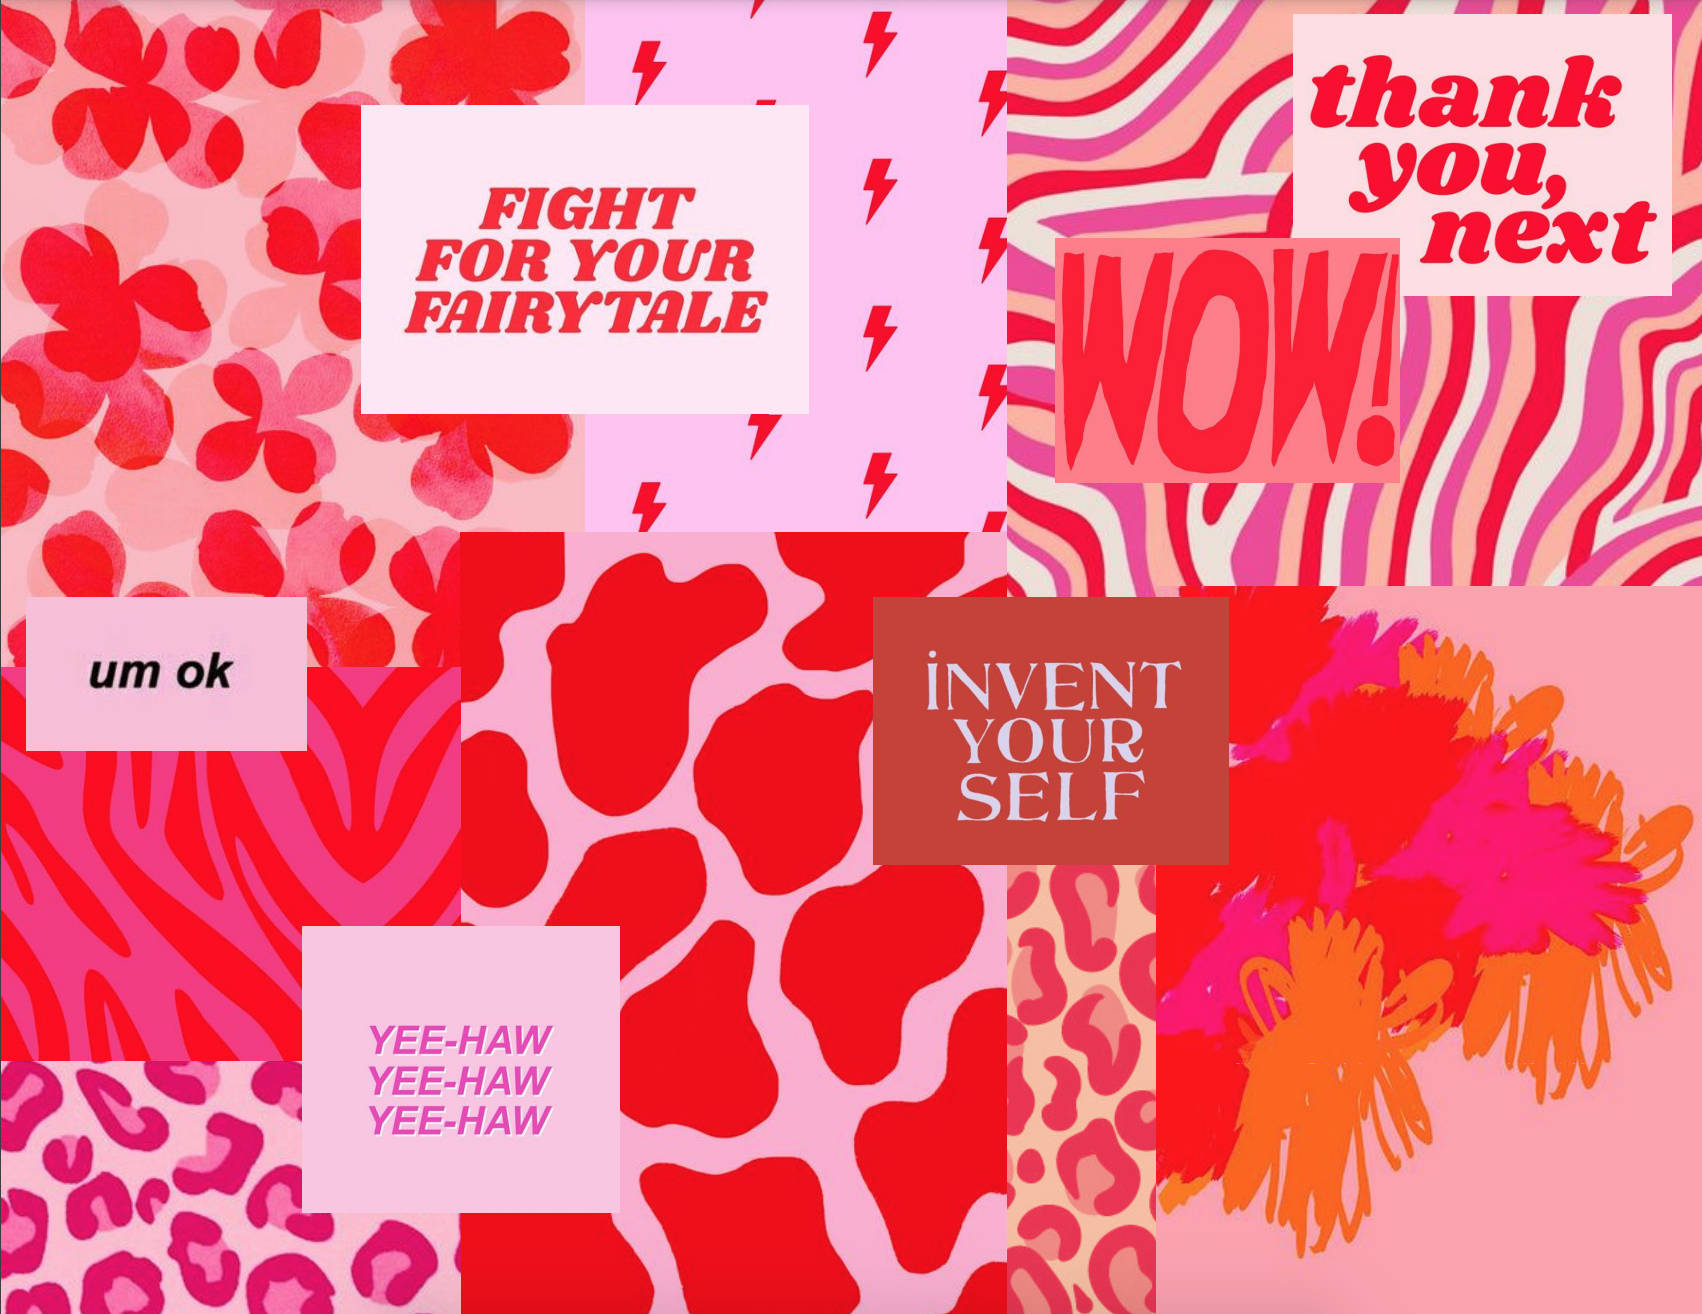 Download free Aesthetic Prints Pink Preppy Wallpaper 